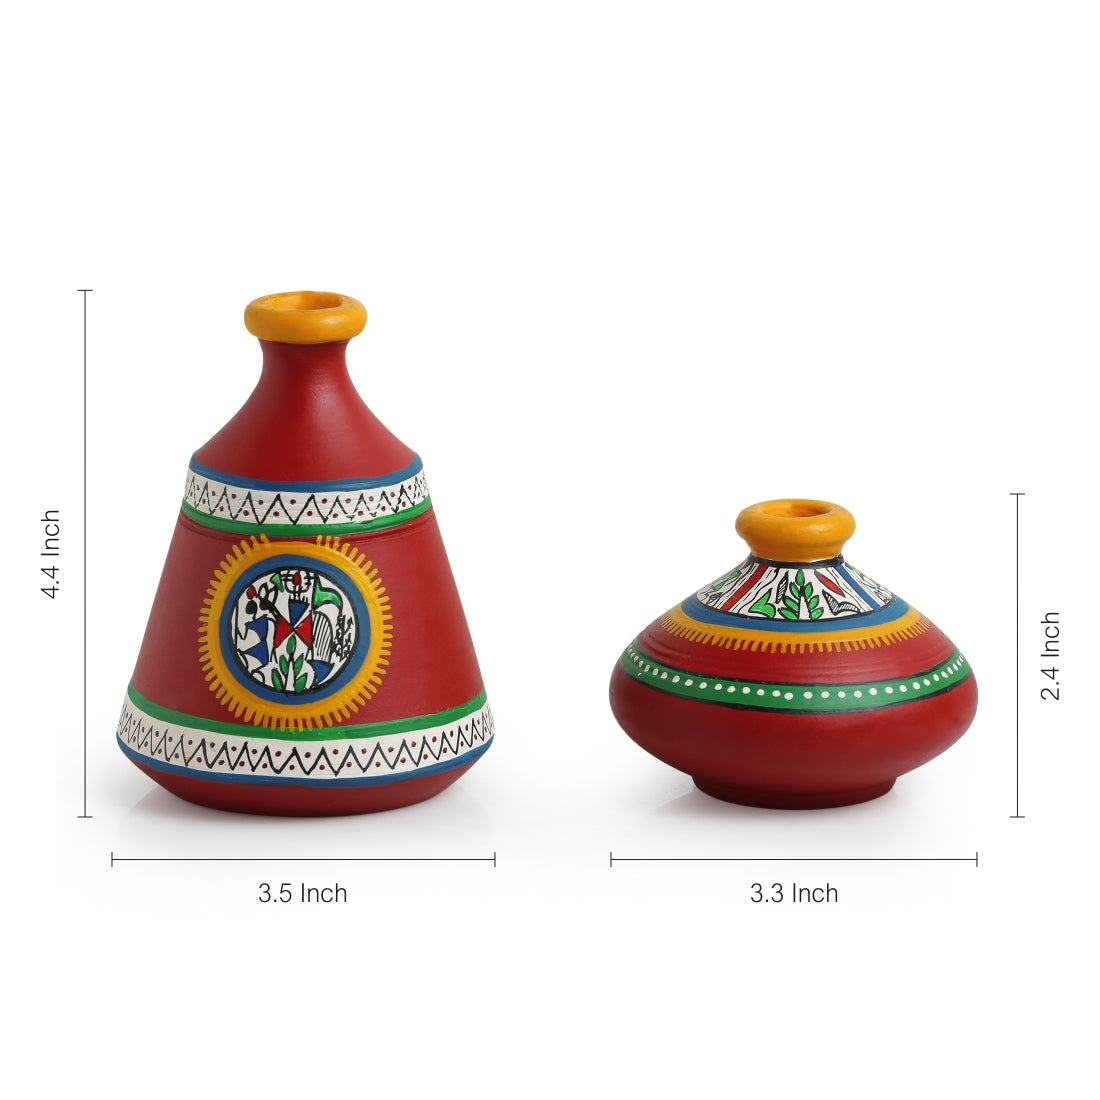 Terracotta Warli Handpainted Pots Showpieces In Red (Set Of 2)